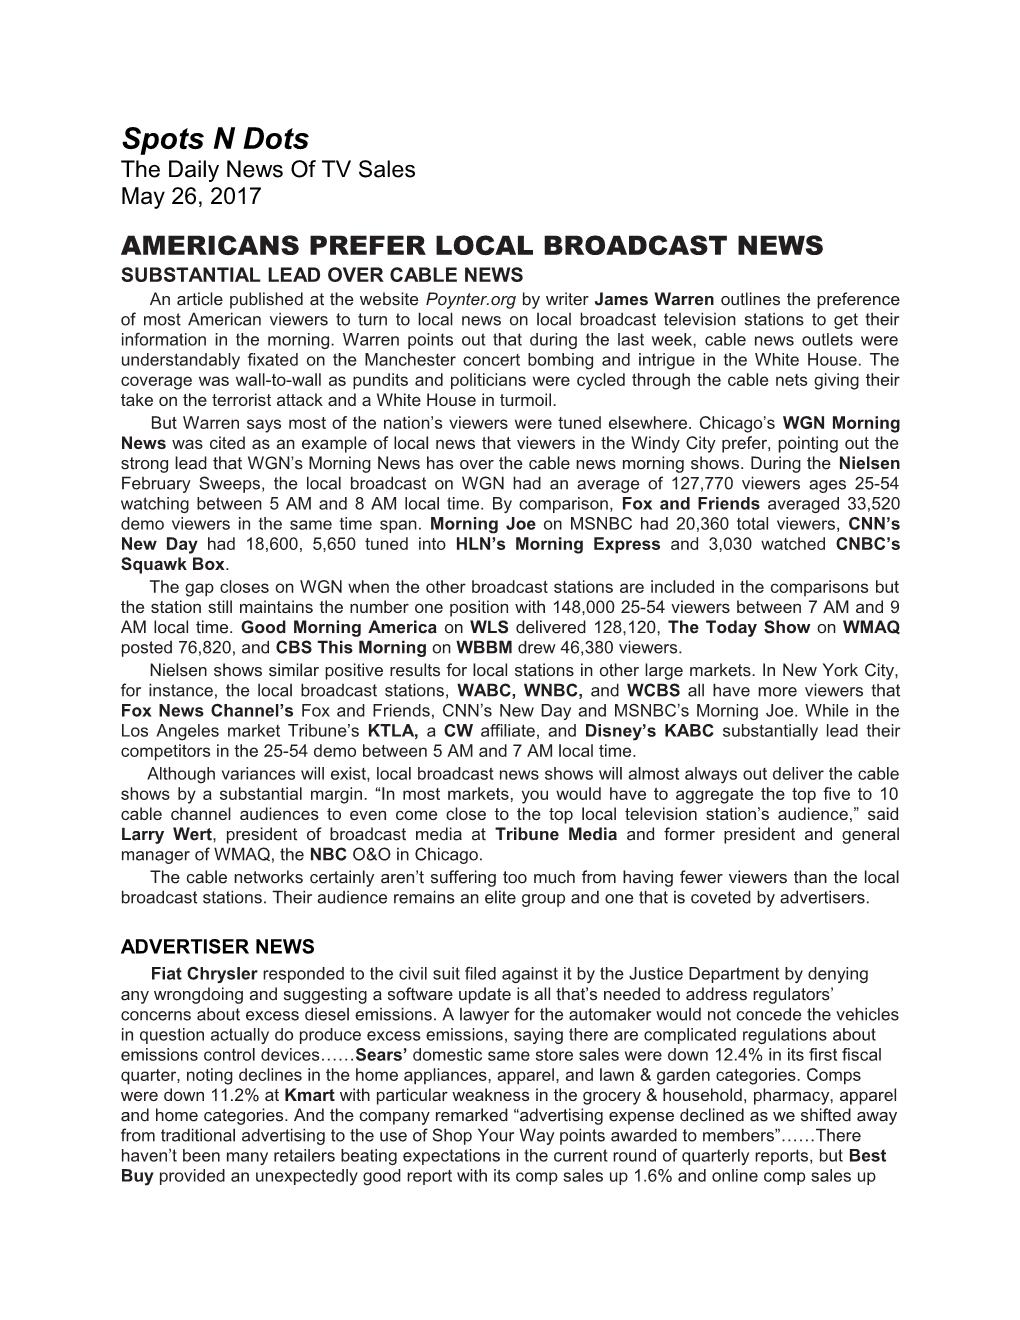 Americans Prefer Local Broadcast News